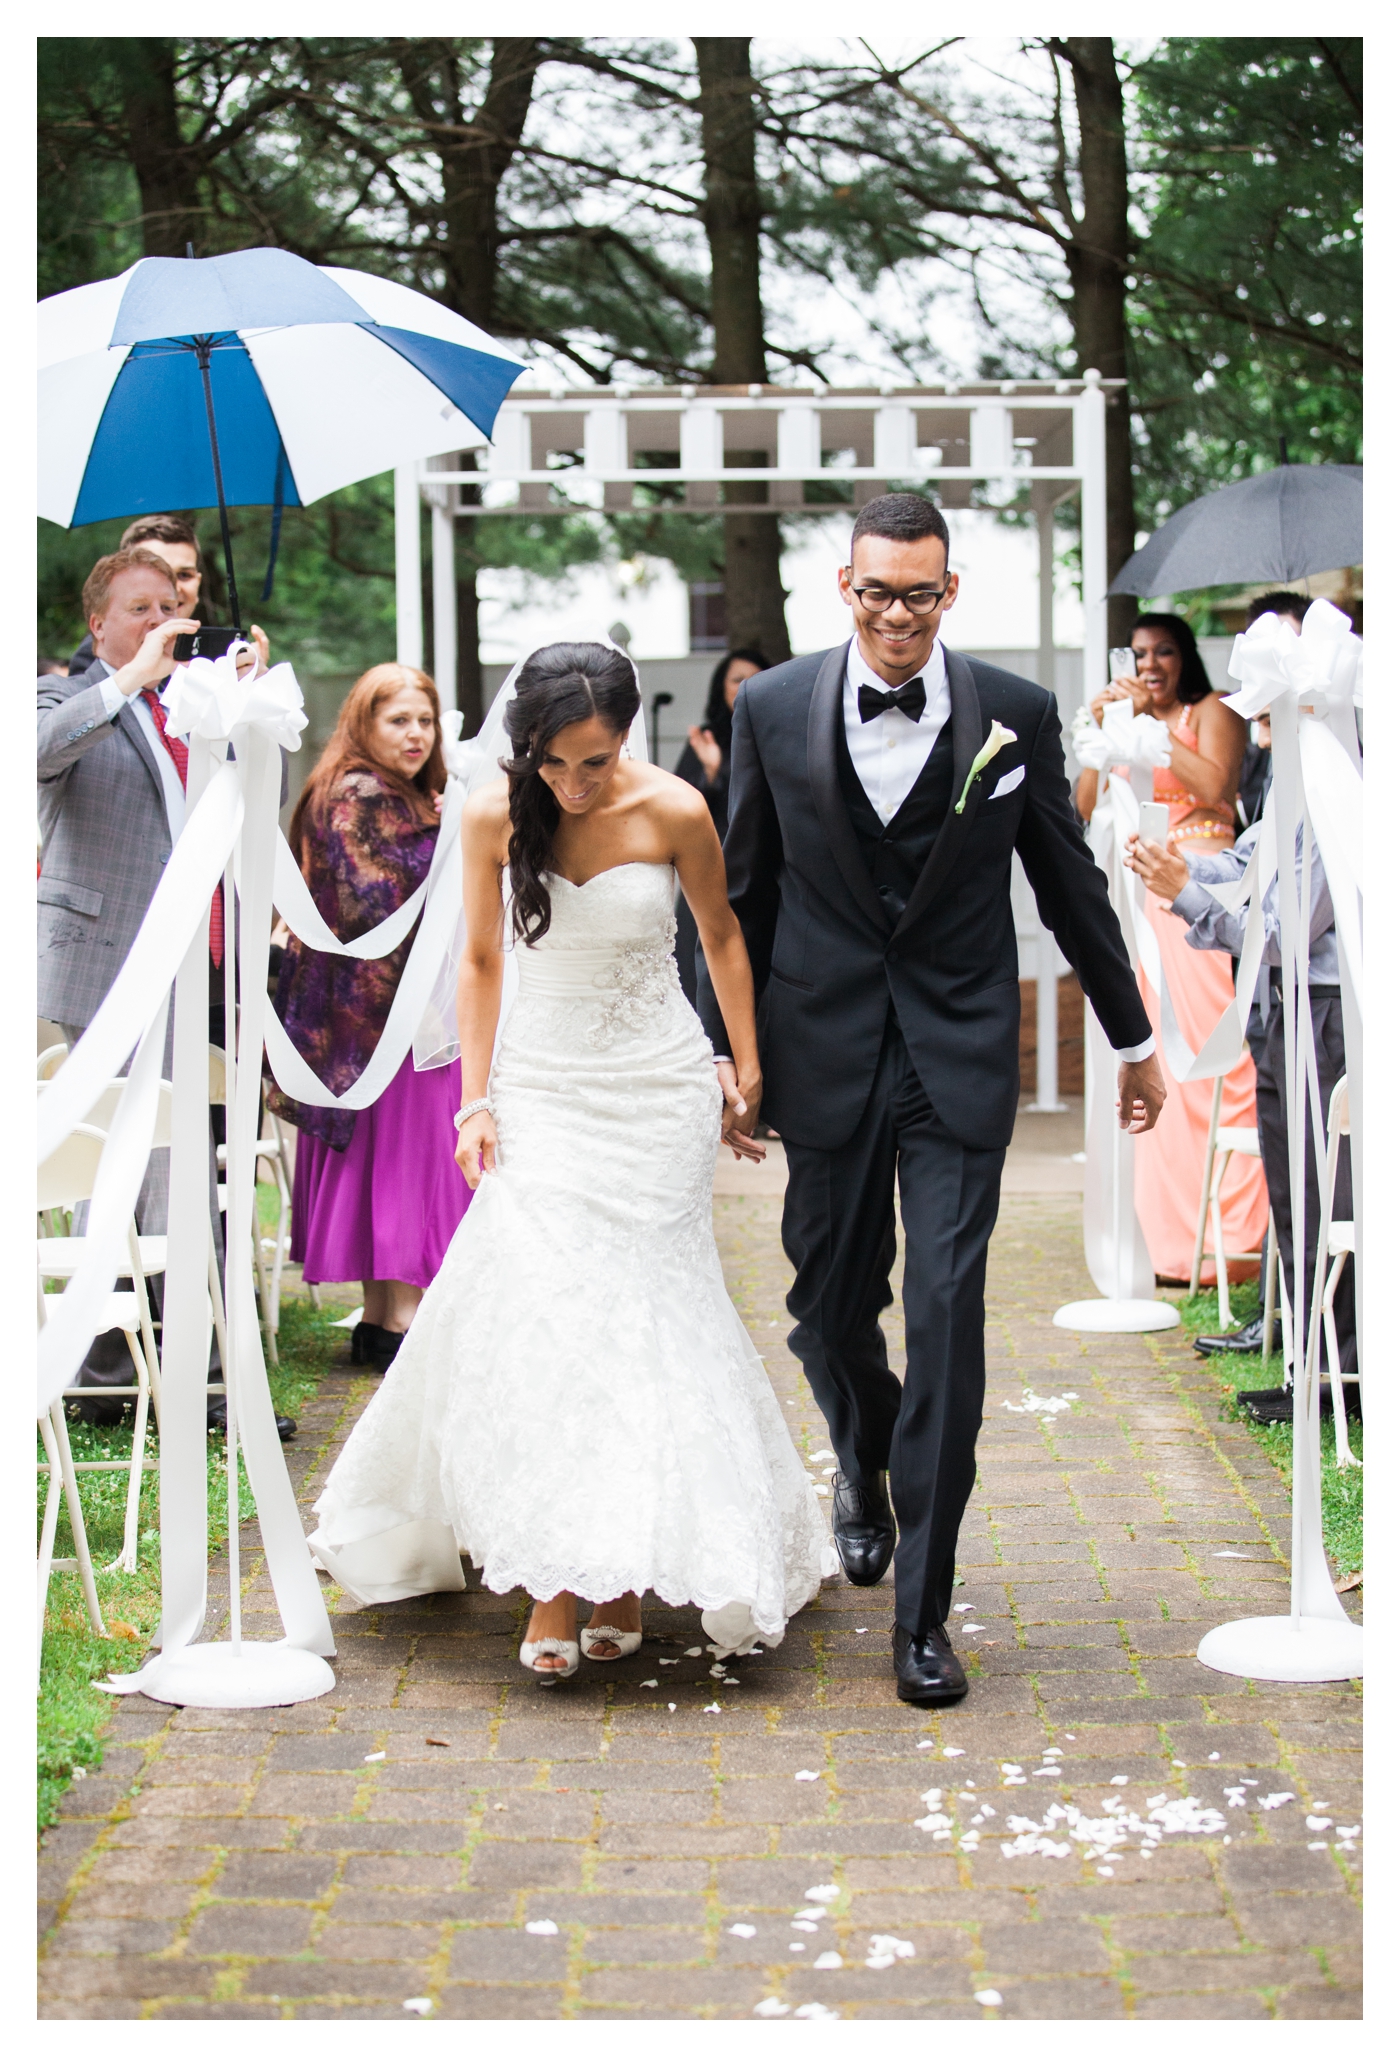 Michele Ashley Photography | Massachusetts Wedding Photographer 10